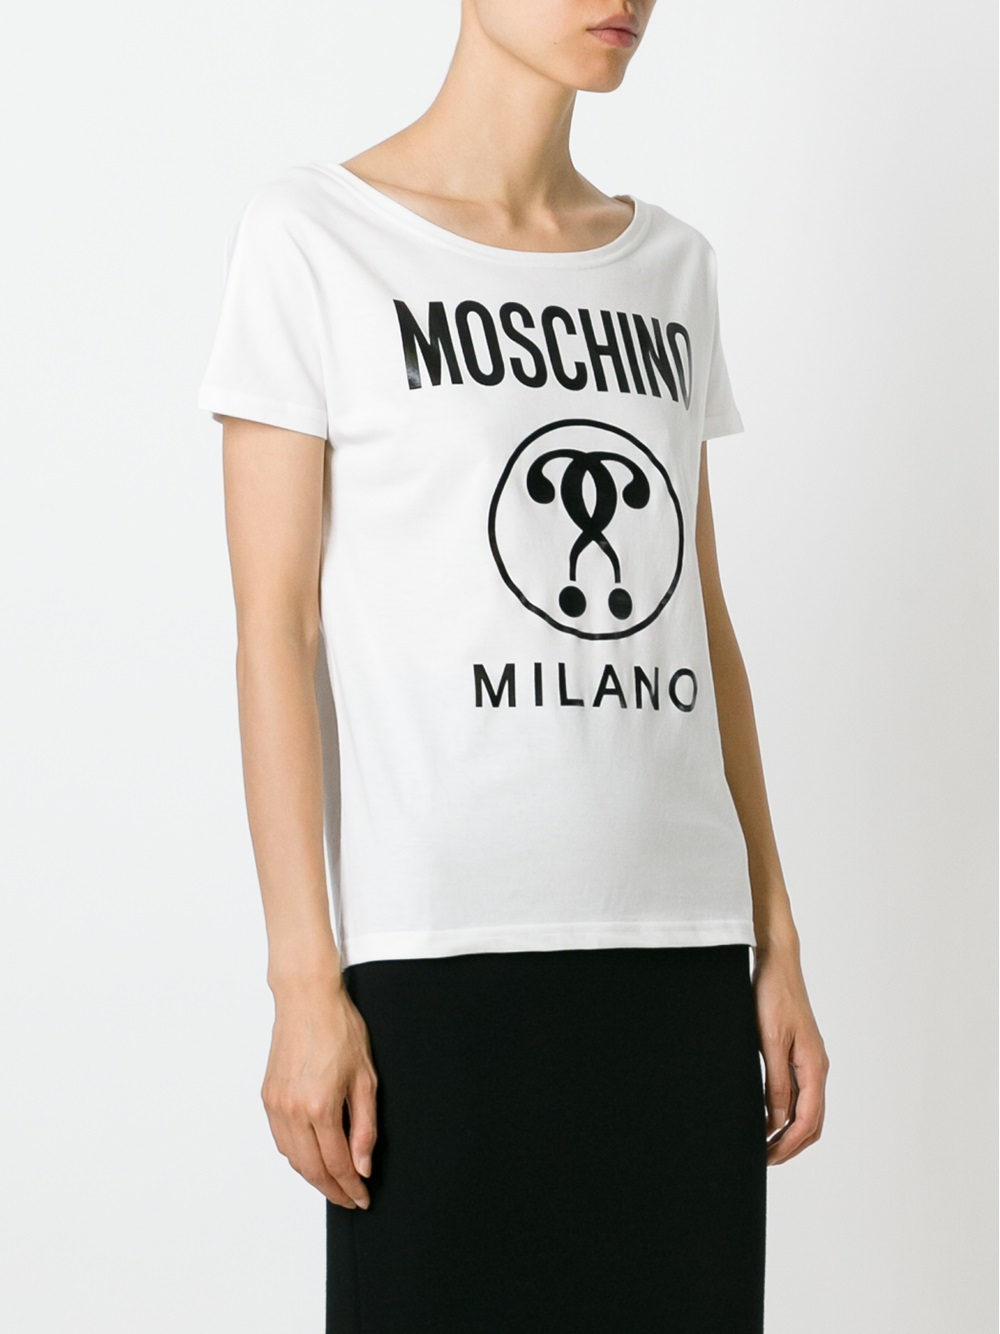 Moschino Milano Print T.shirt in Black - Lyst